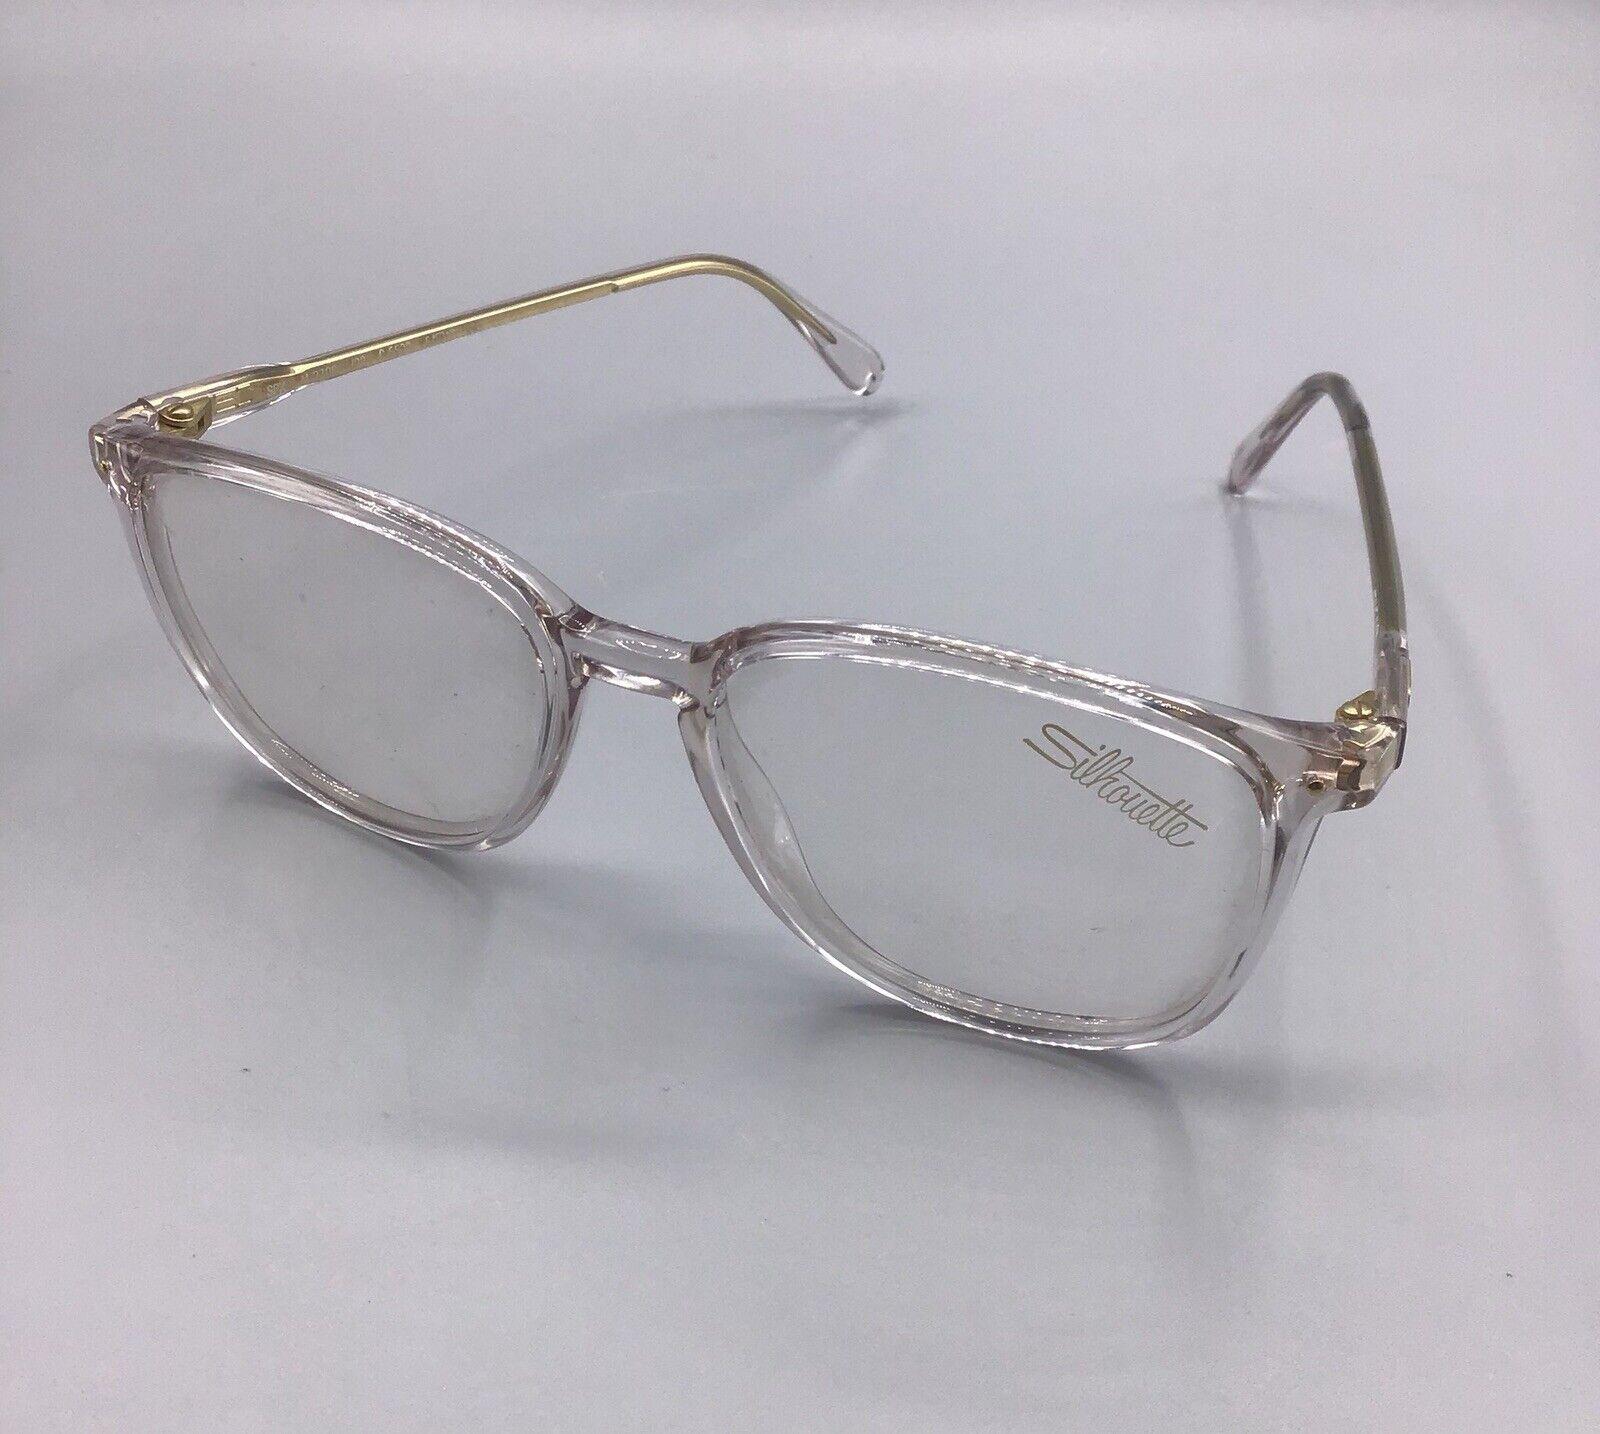 Silhouette Eyewear Glasses Occhiale Vintage Frame Brillen model M2709 /22 colore 5523